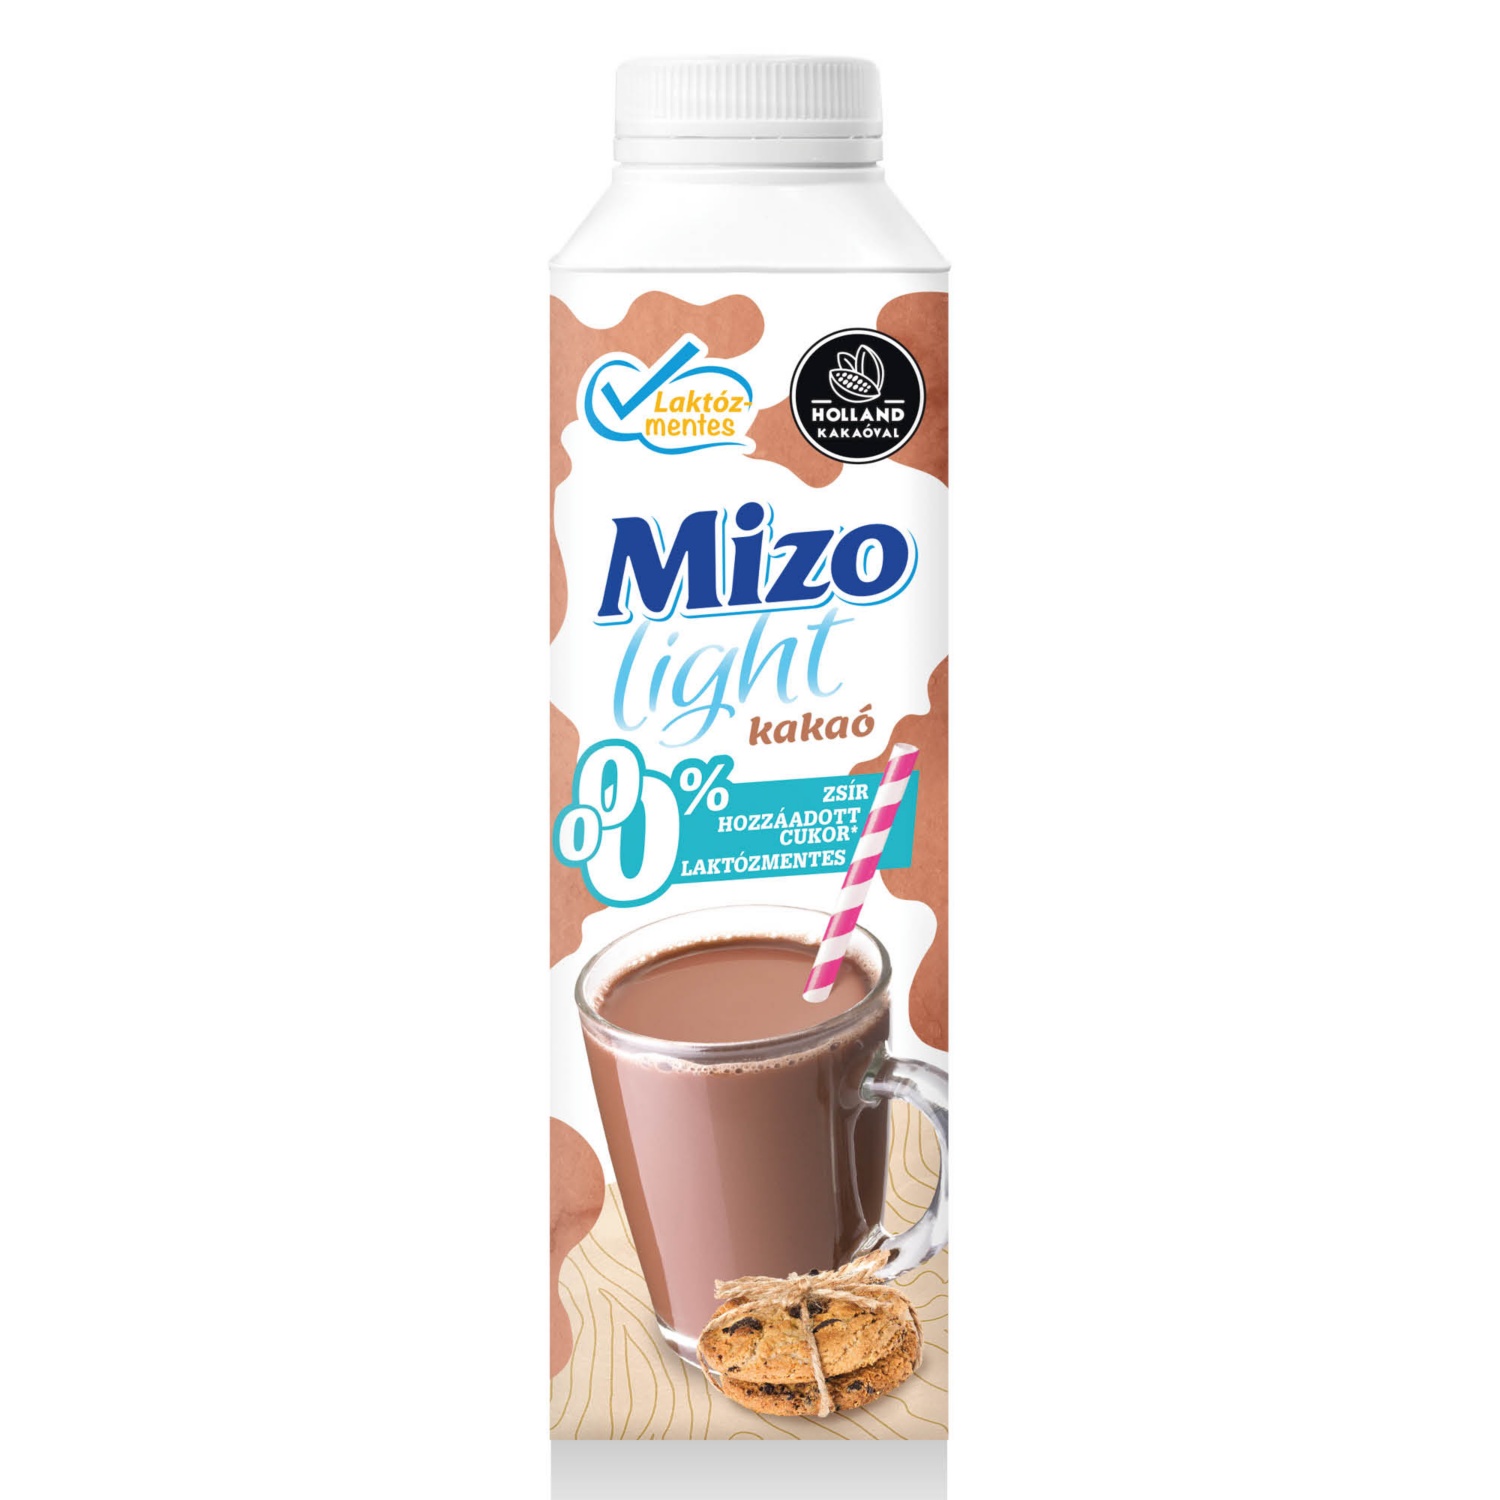 MIZO Light kakaóízű tejital, 450 ml